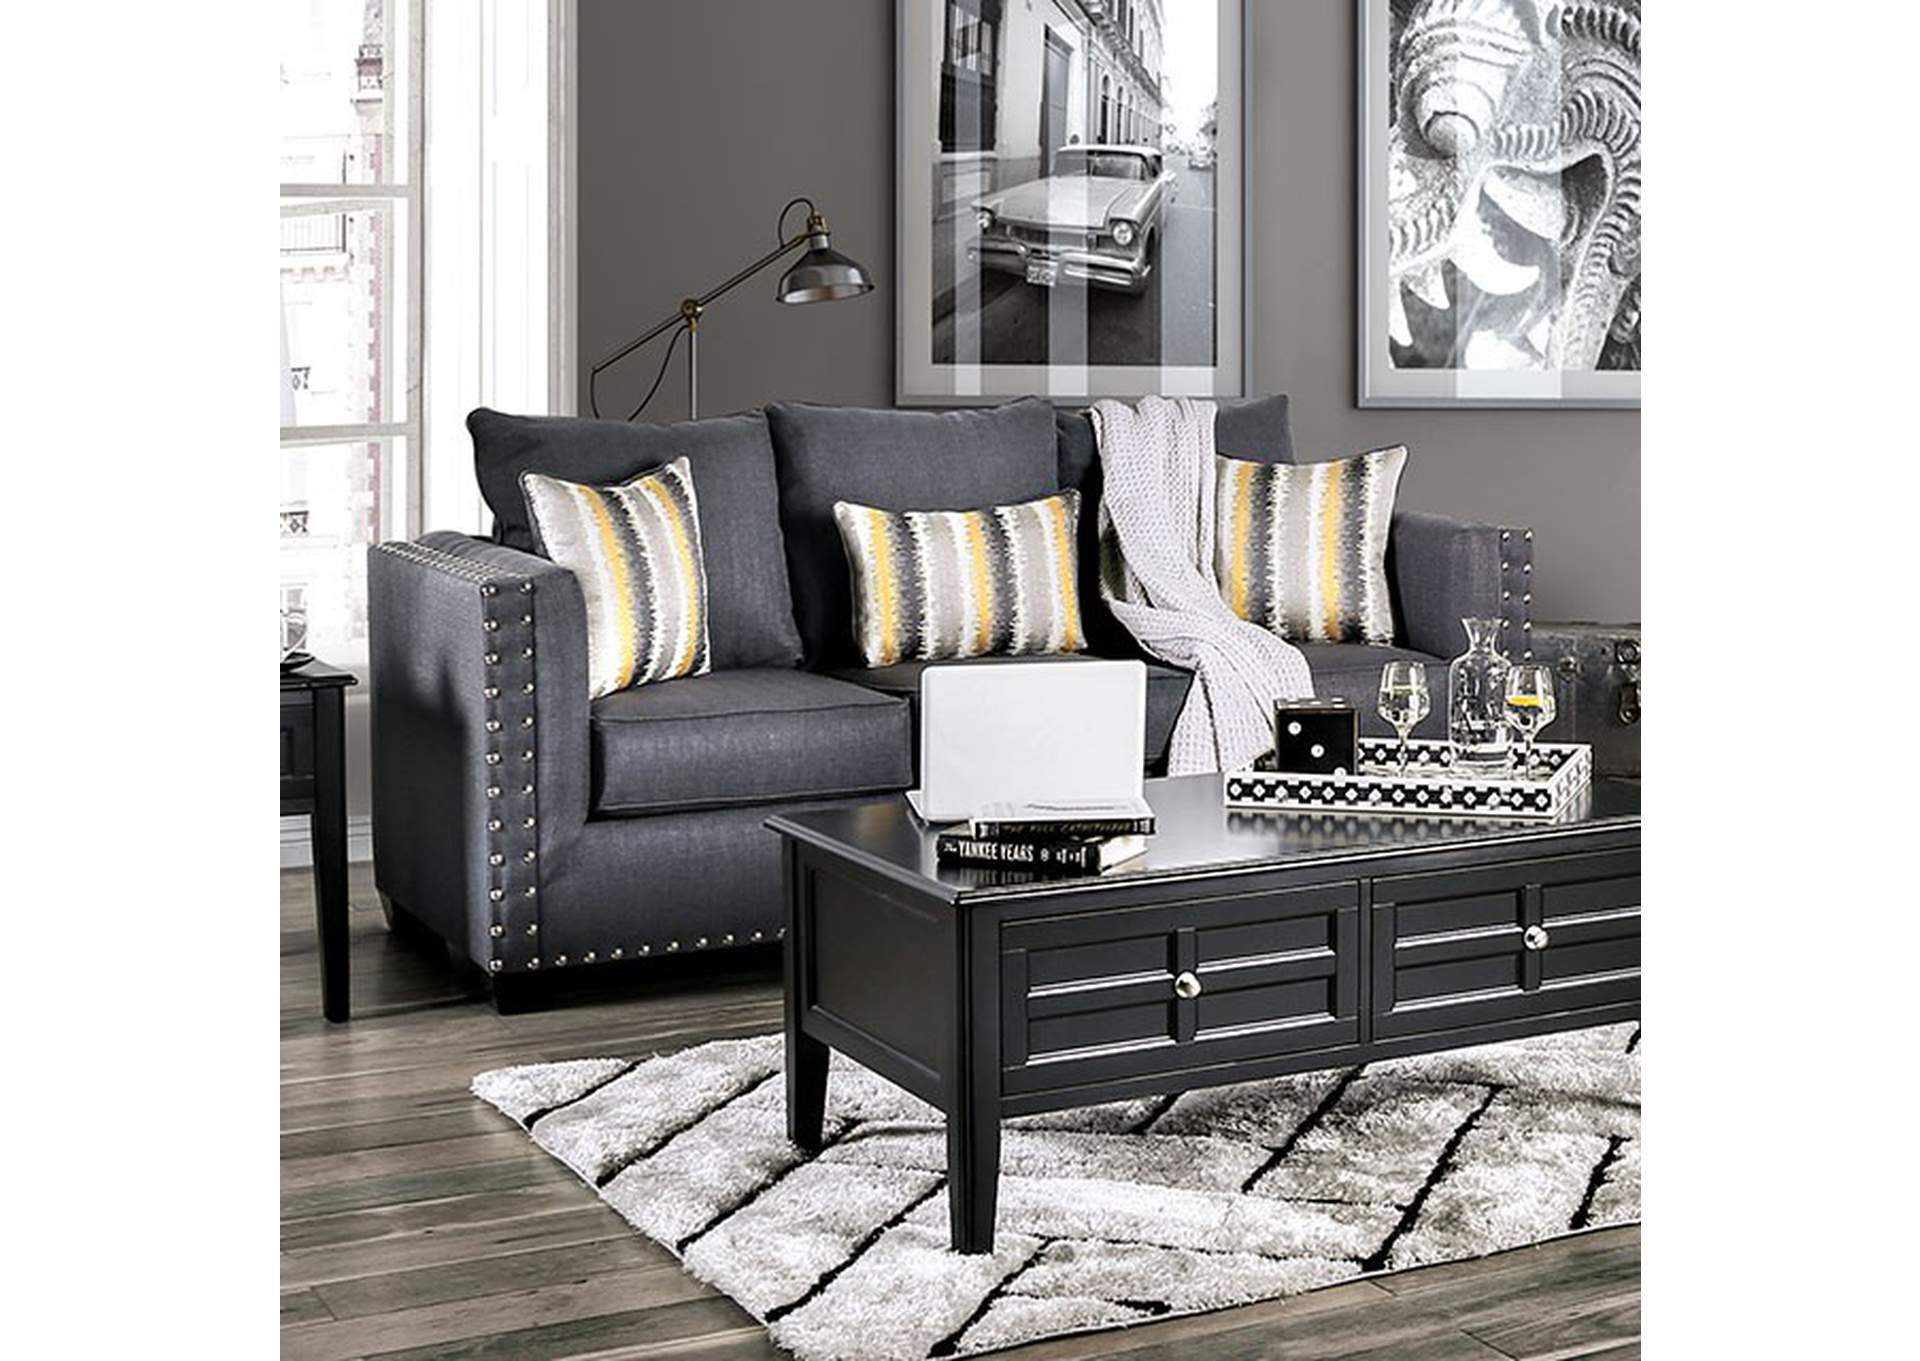 Inkom Sofa,Furniture of America